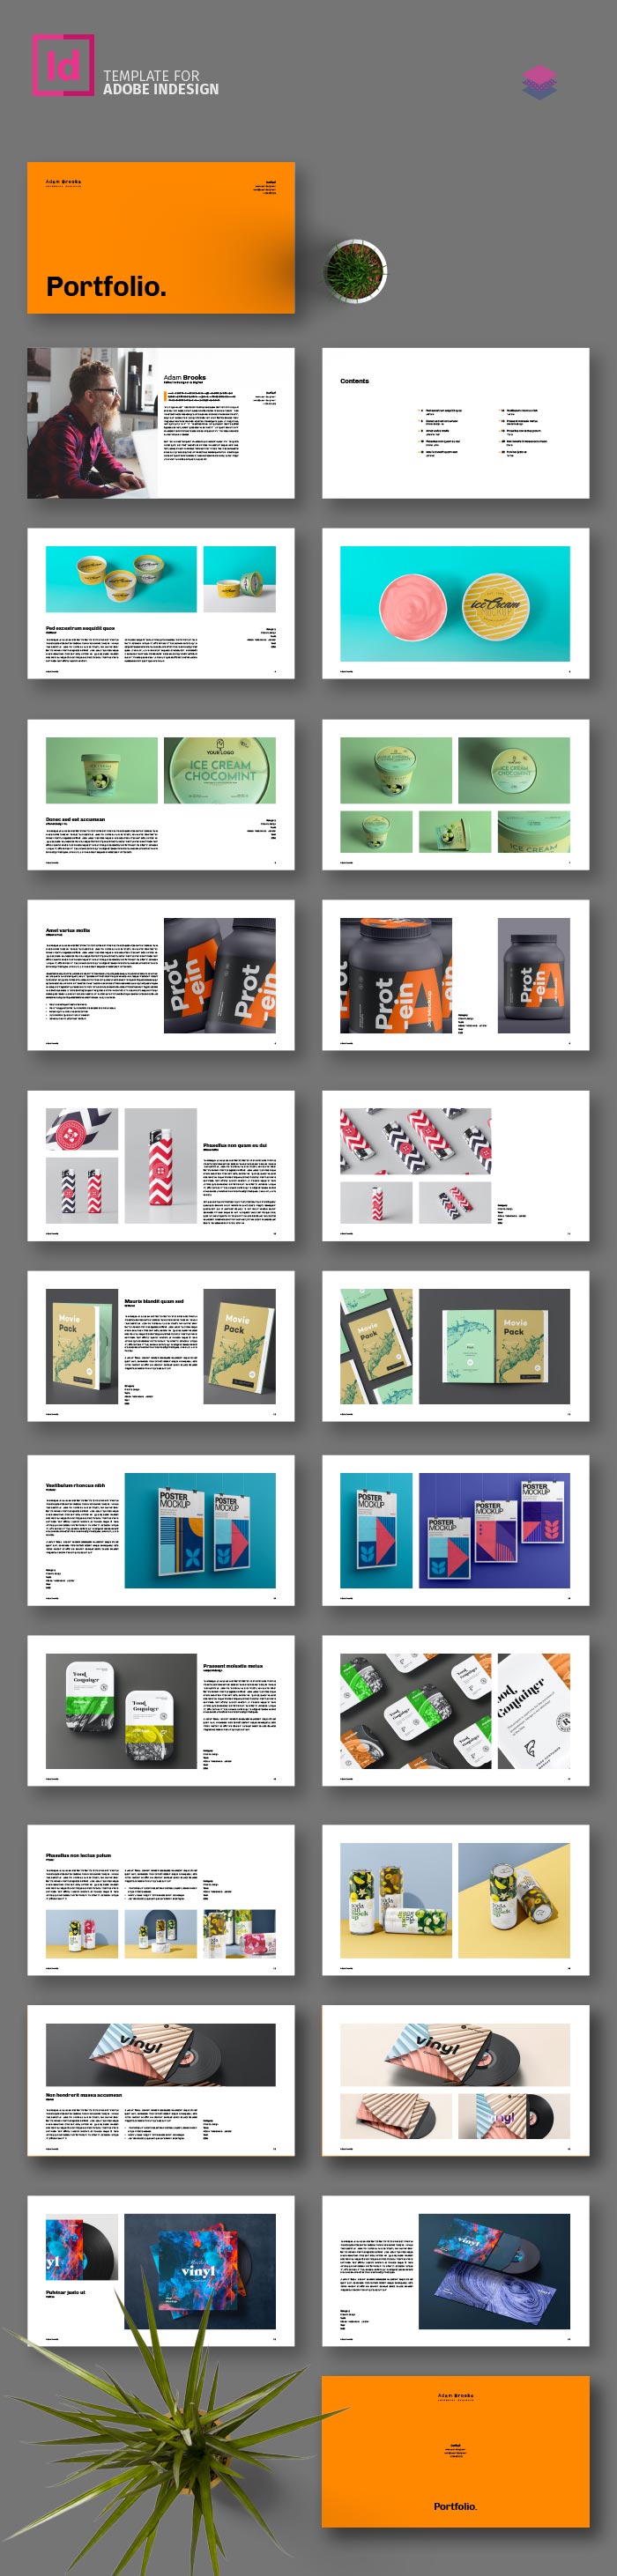 Free Portfolio Template for Designers in Adobe InDesign